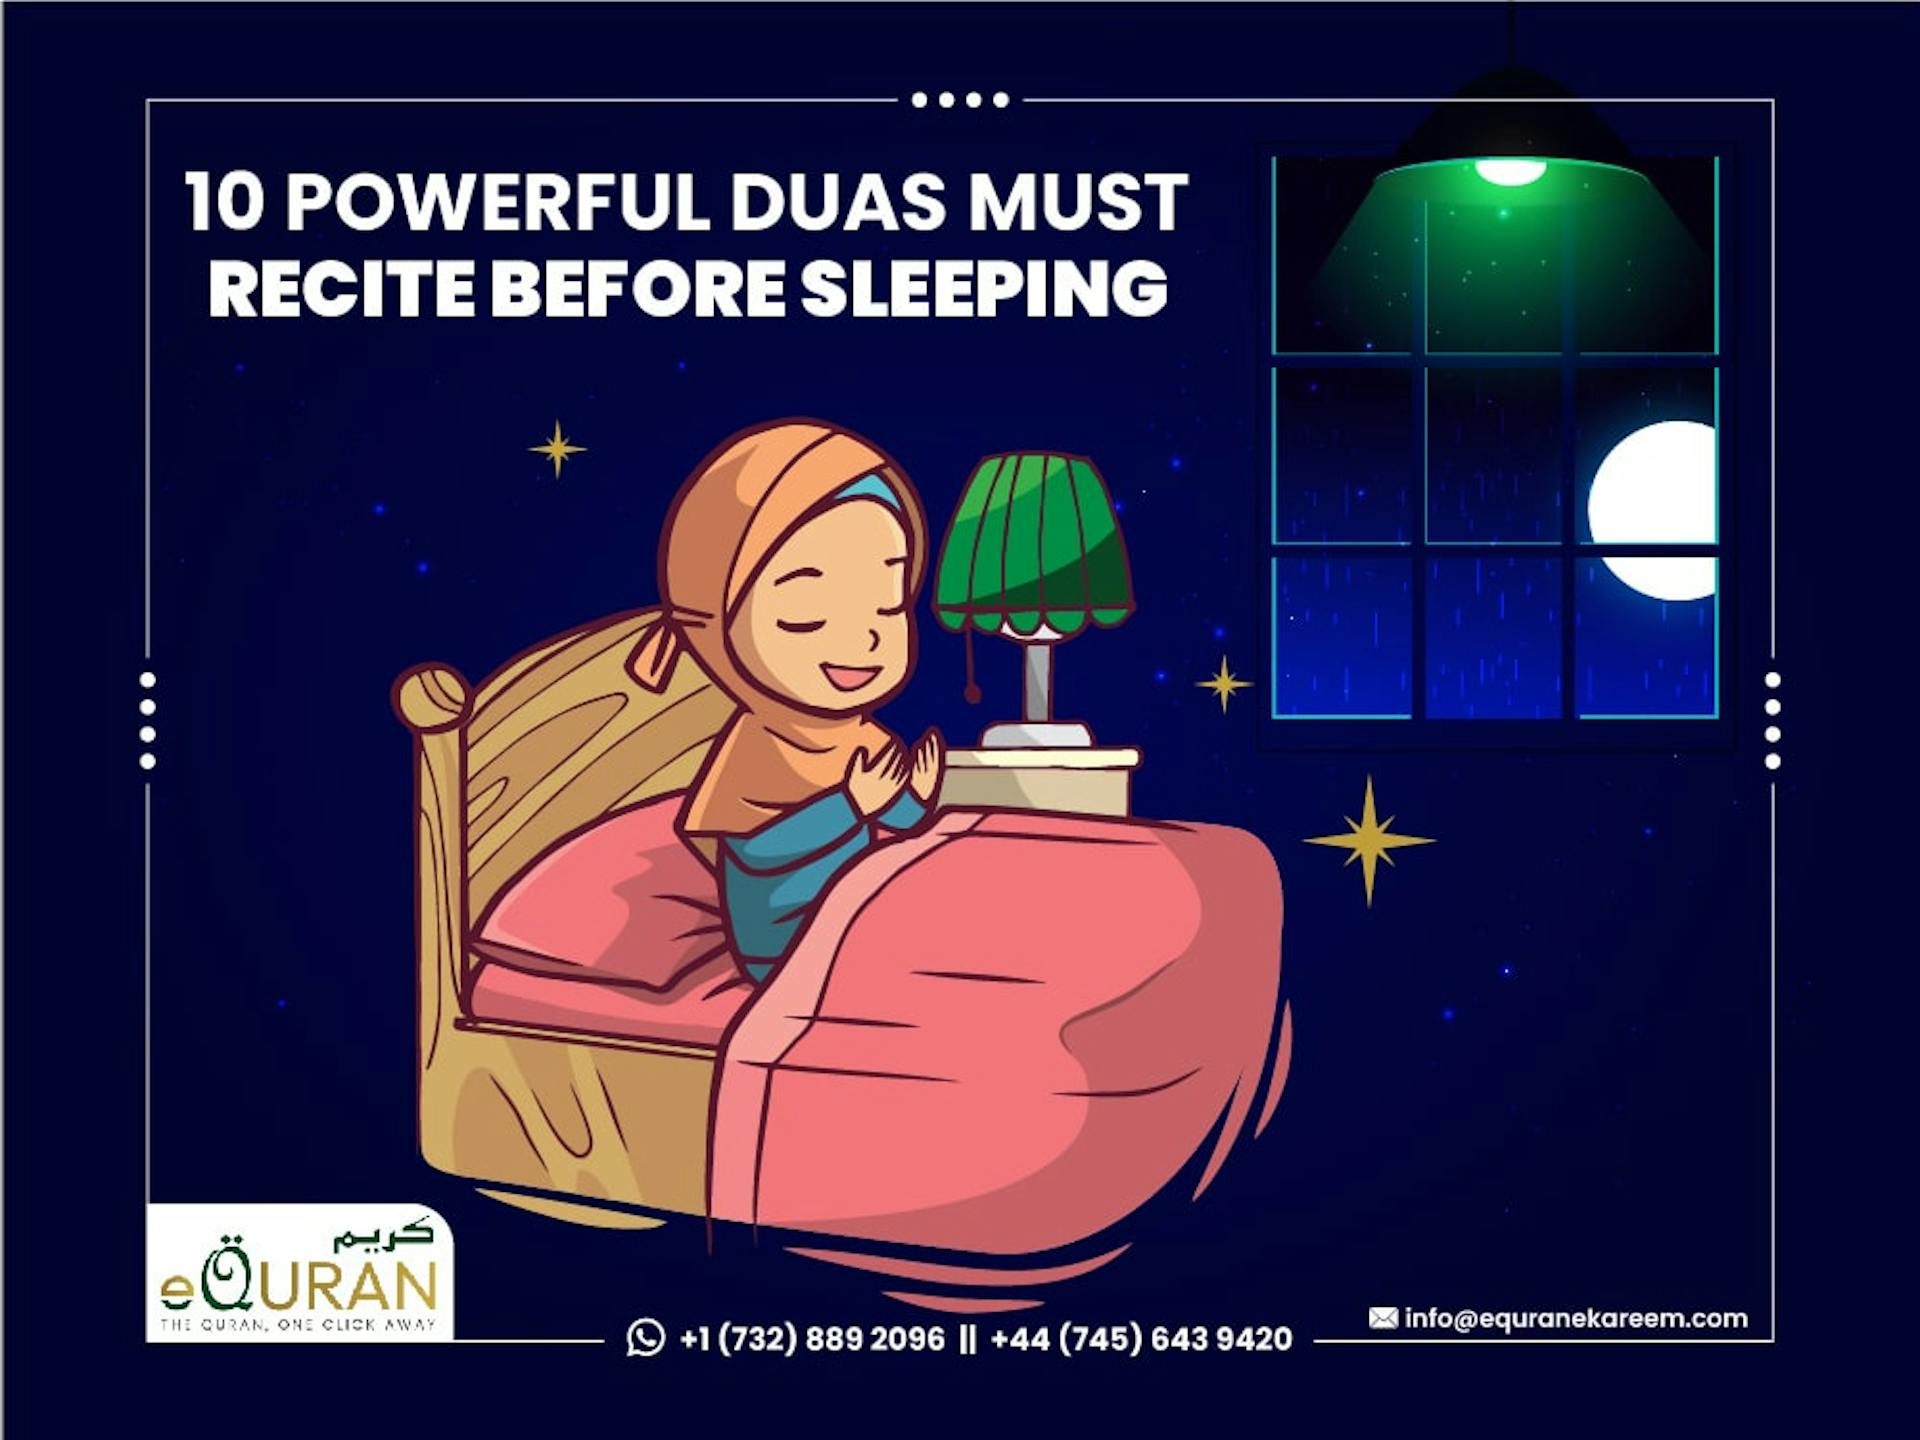 10 Powerful Duas Must Recite Before Sleeping by eQuranekareem